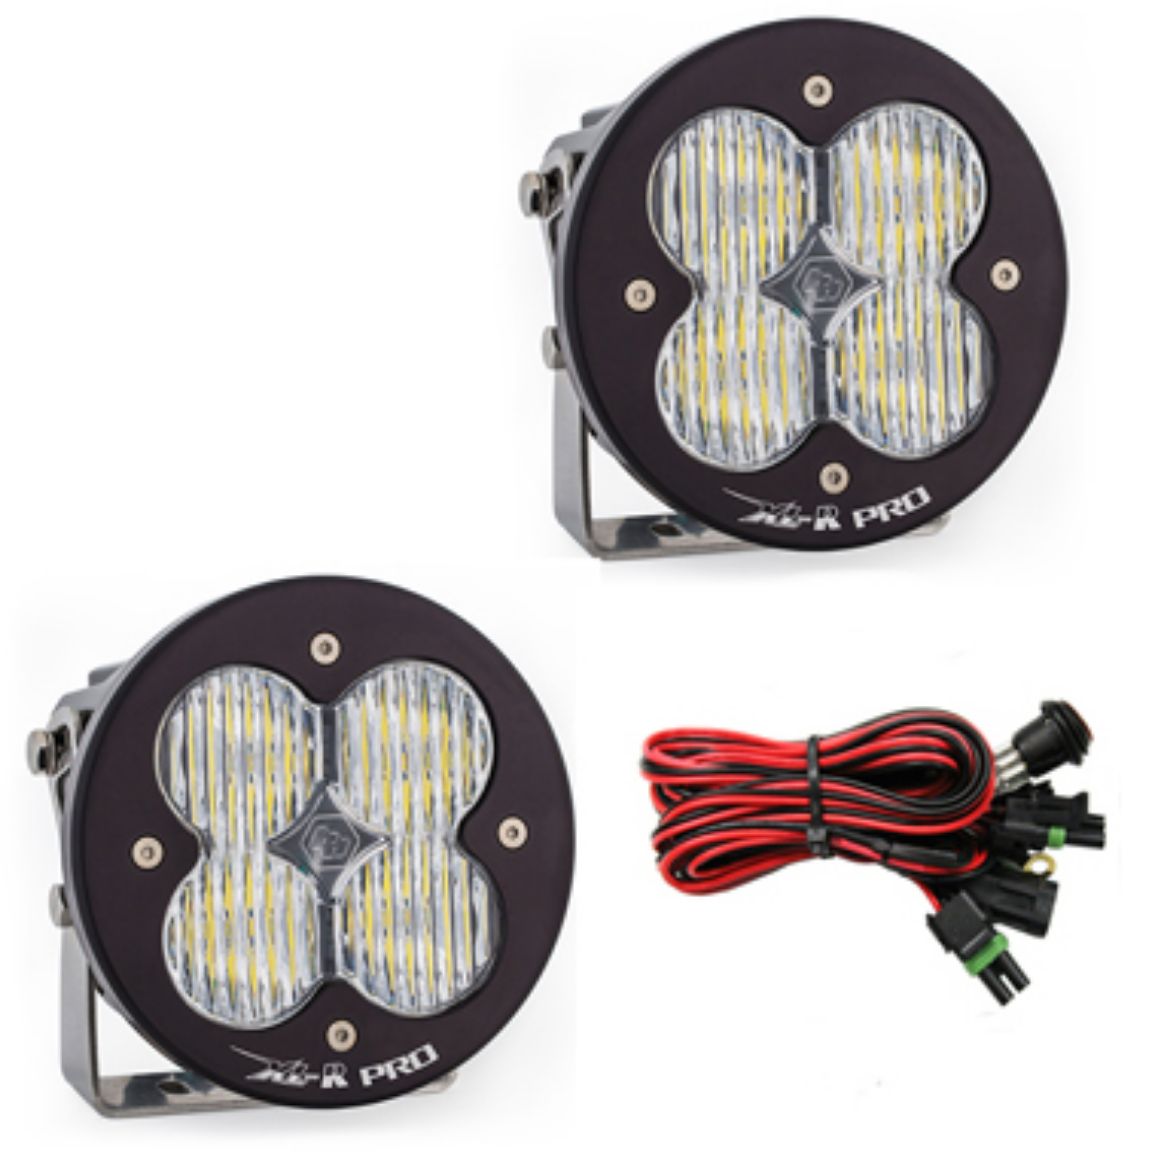 Picture of LED Light Pods Pair XL R Pro Series Baja Designs